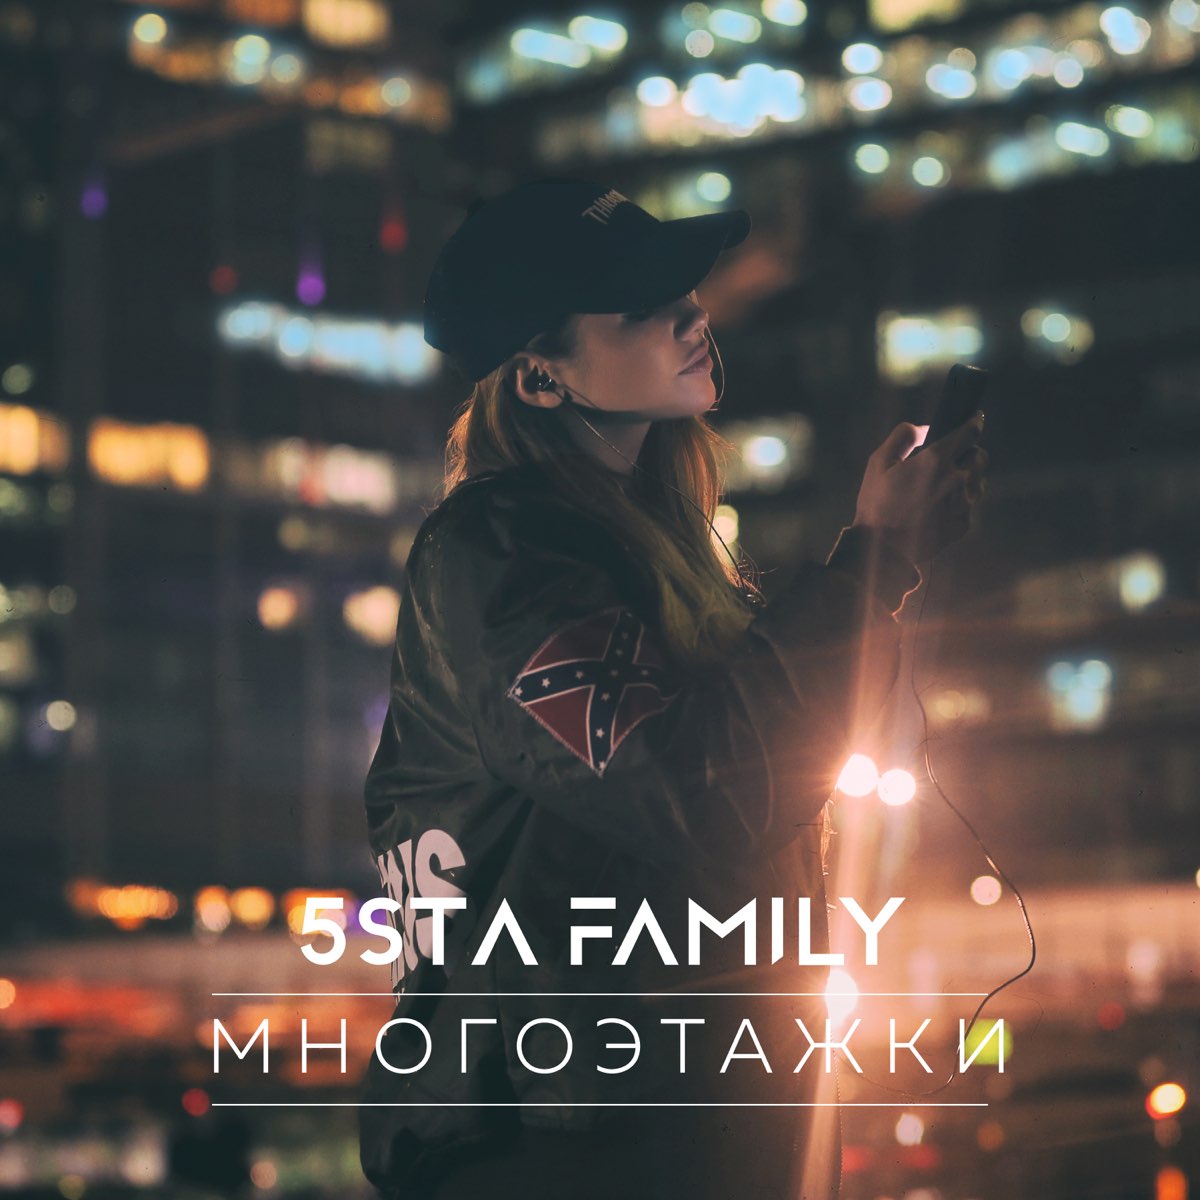 Семья песня мп3. Многоэтажки 5sta Family. 5sta Family - многоэтажки (DJ Pitkin Remix). Обложка 5sta Family - многоэтажки. 5sta Family арт.